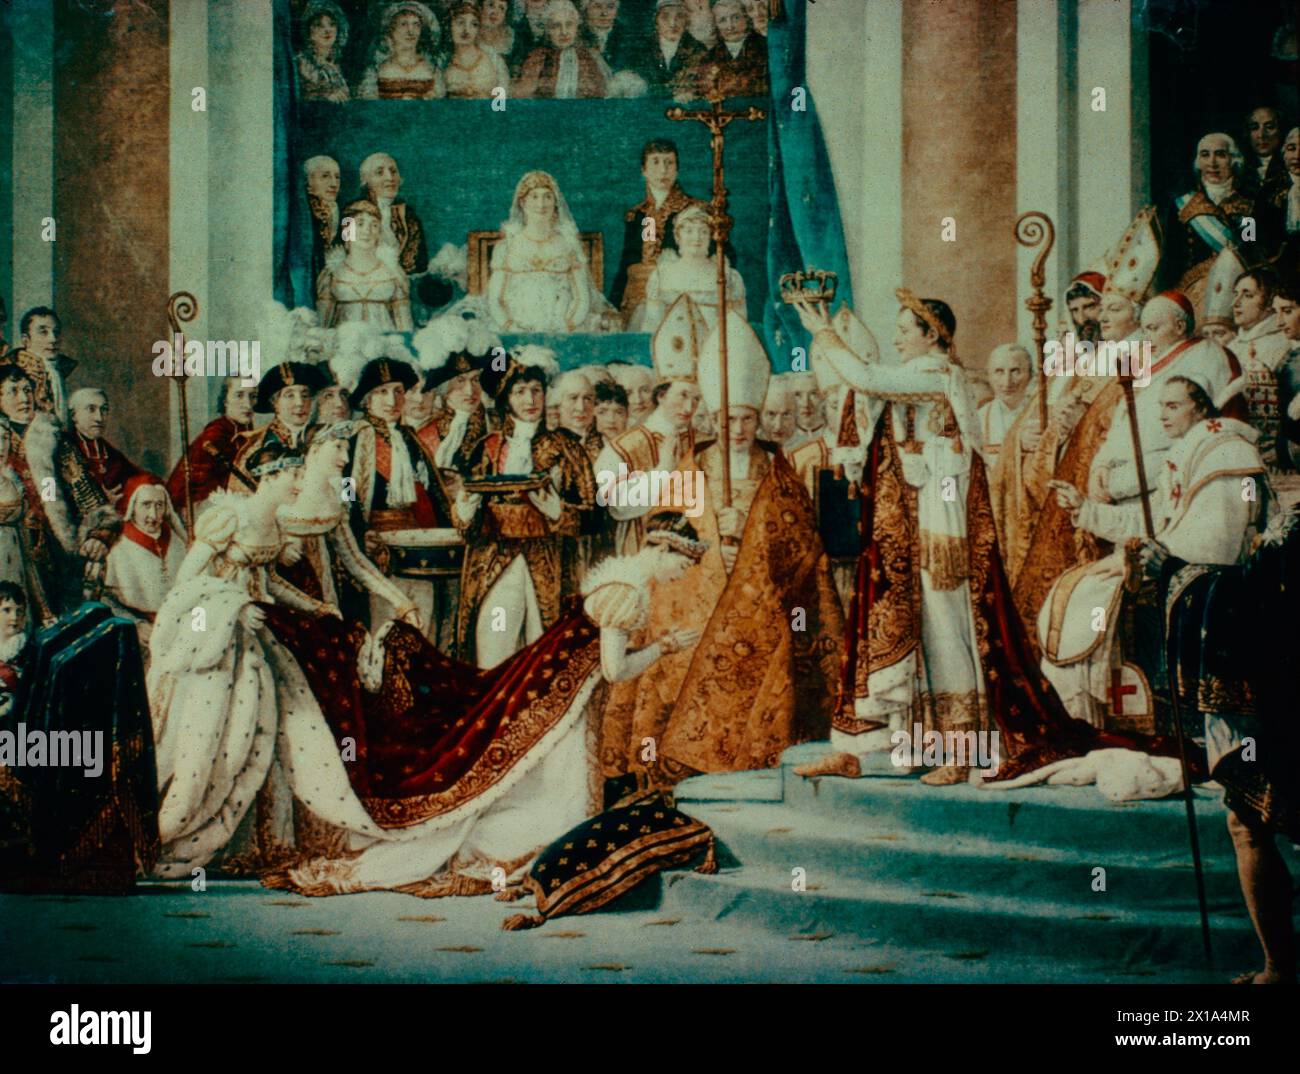 Napoleón se corona emperador de los franceses, pintura del artista francés Jacques-Louis David, siglo XVIII Foto de stock